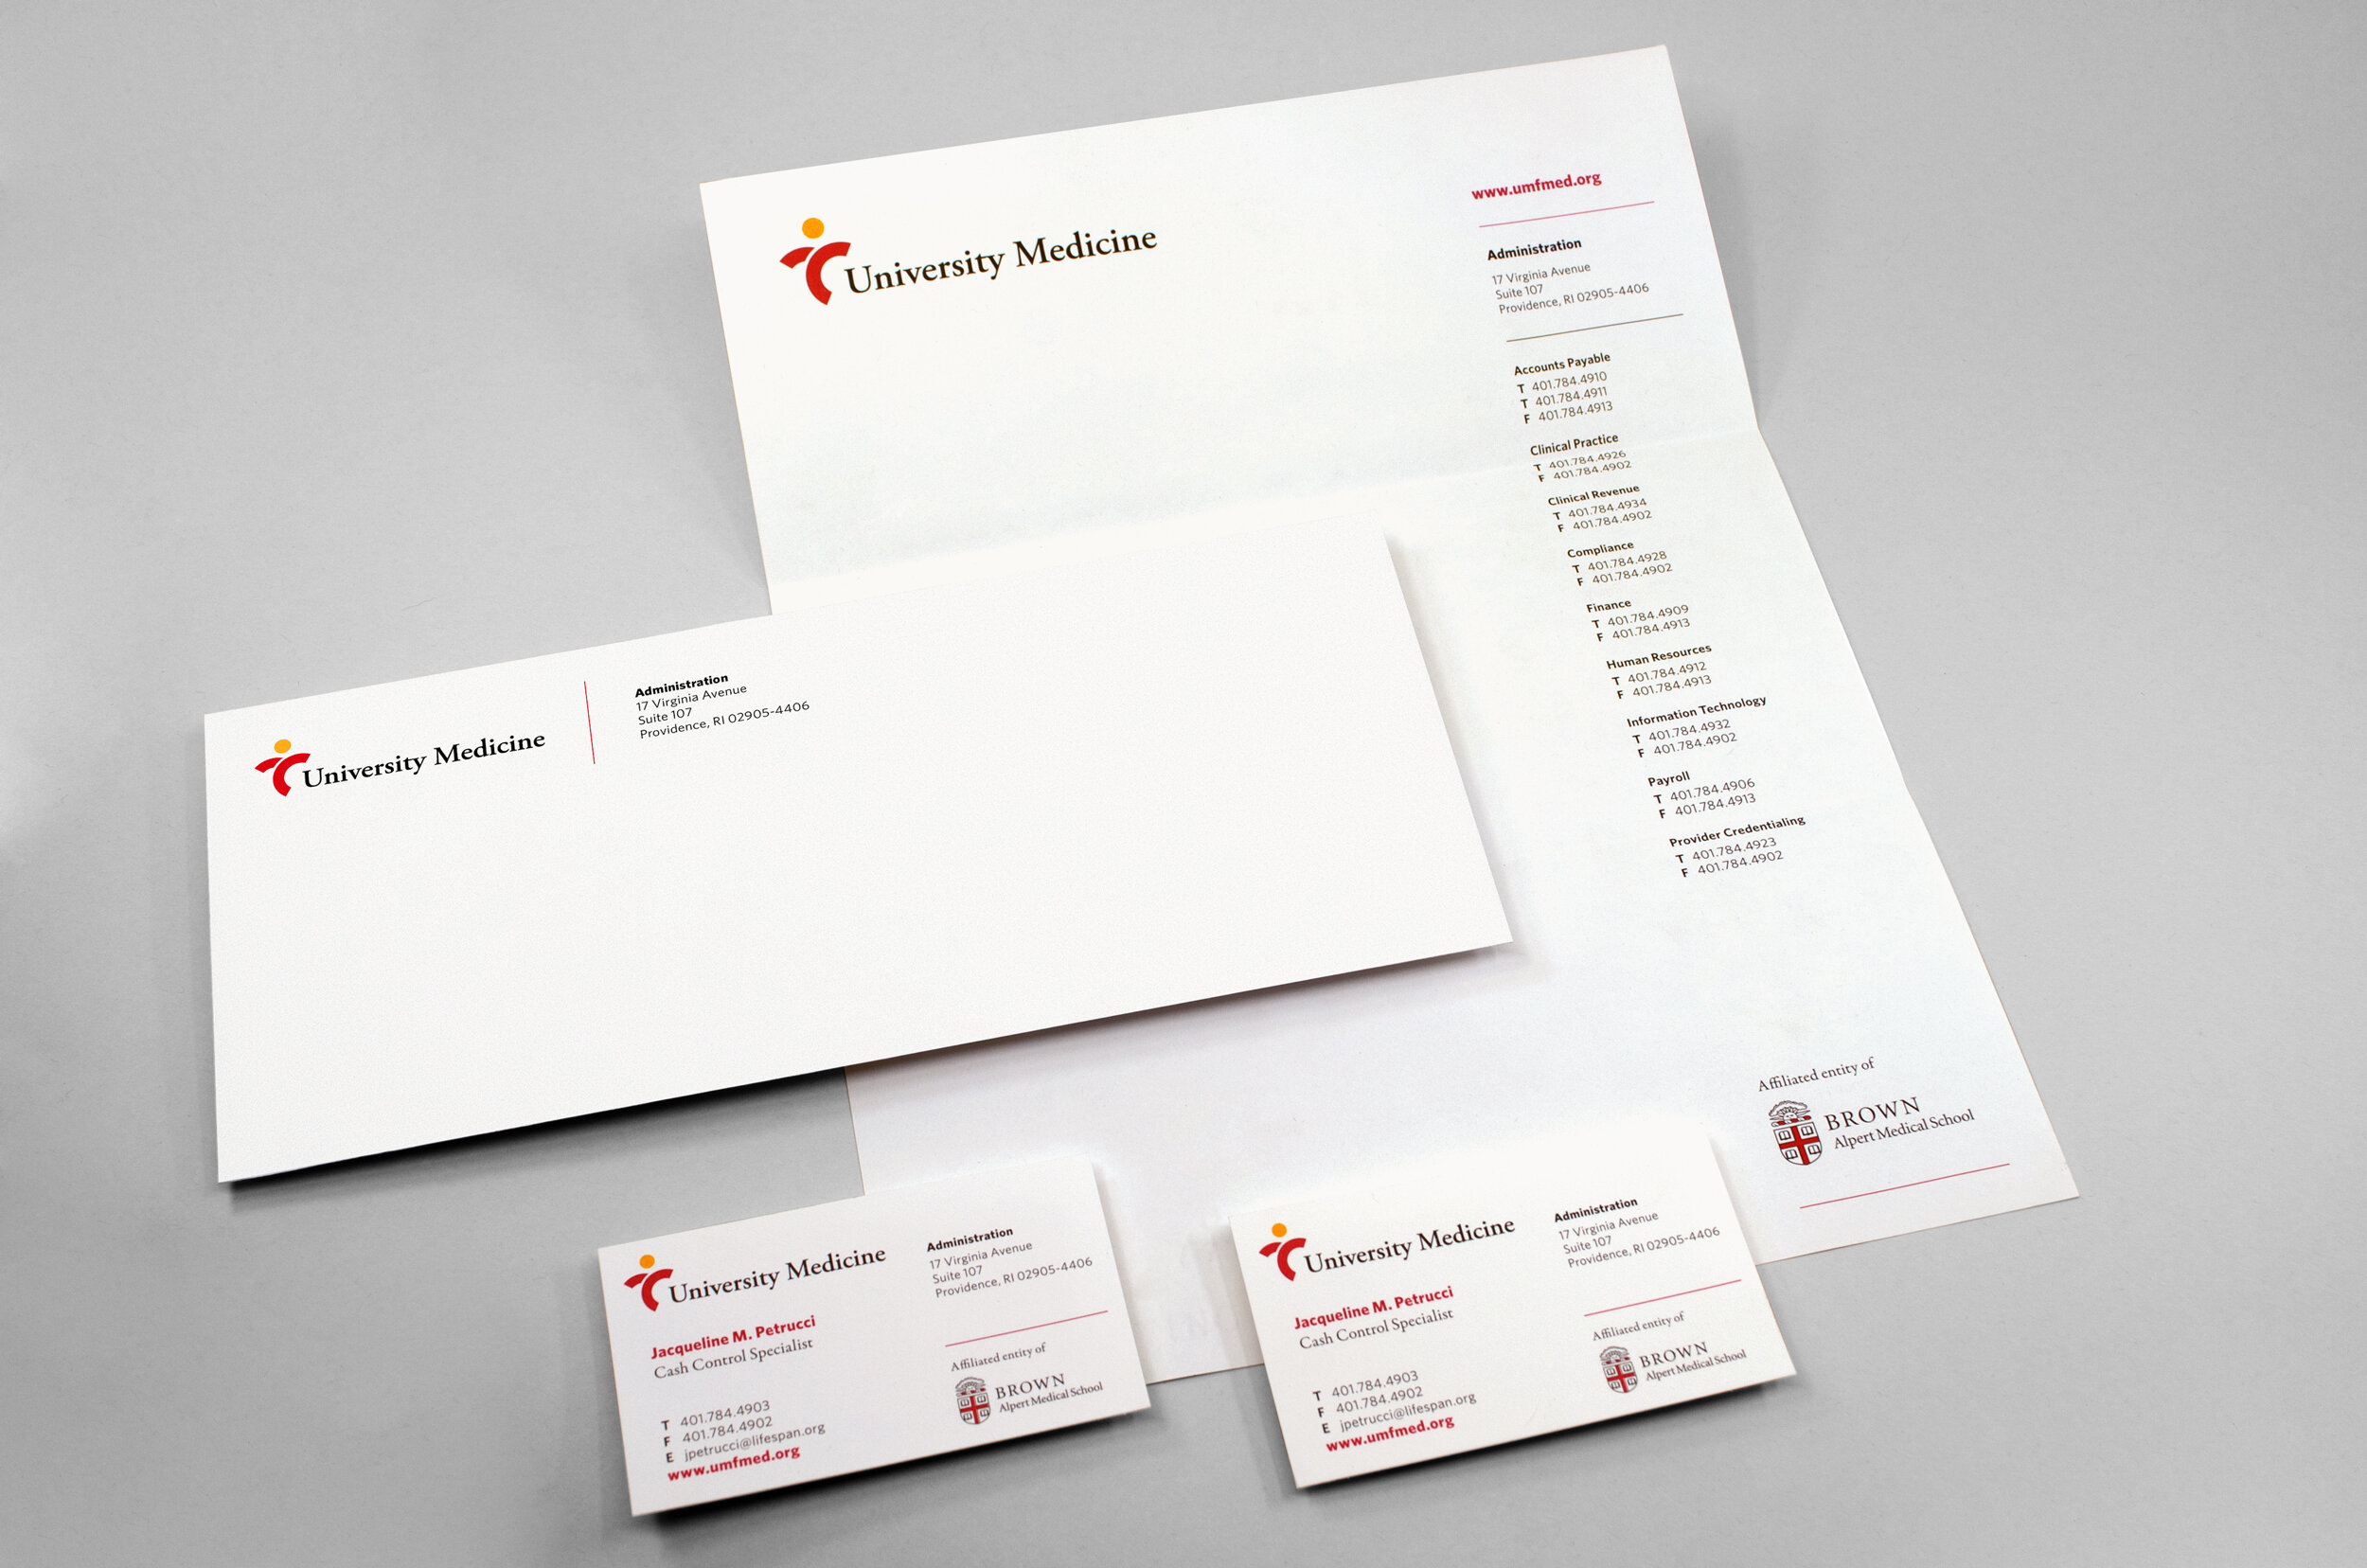   letterhead system  • designer/director: Michael Balint • assistant designer: Dawn Vietro 